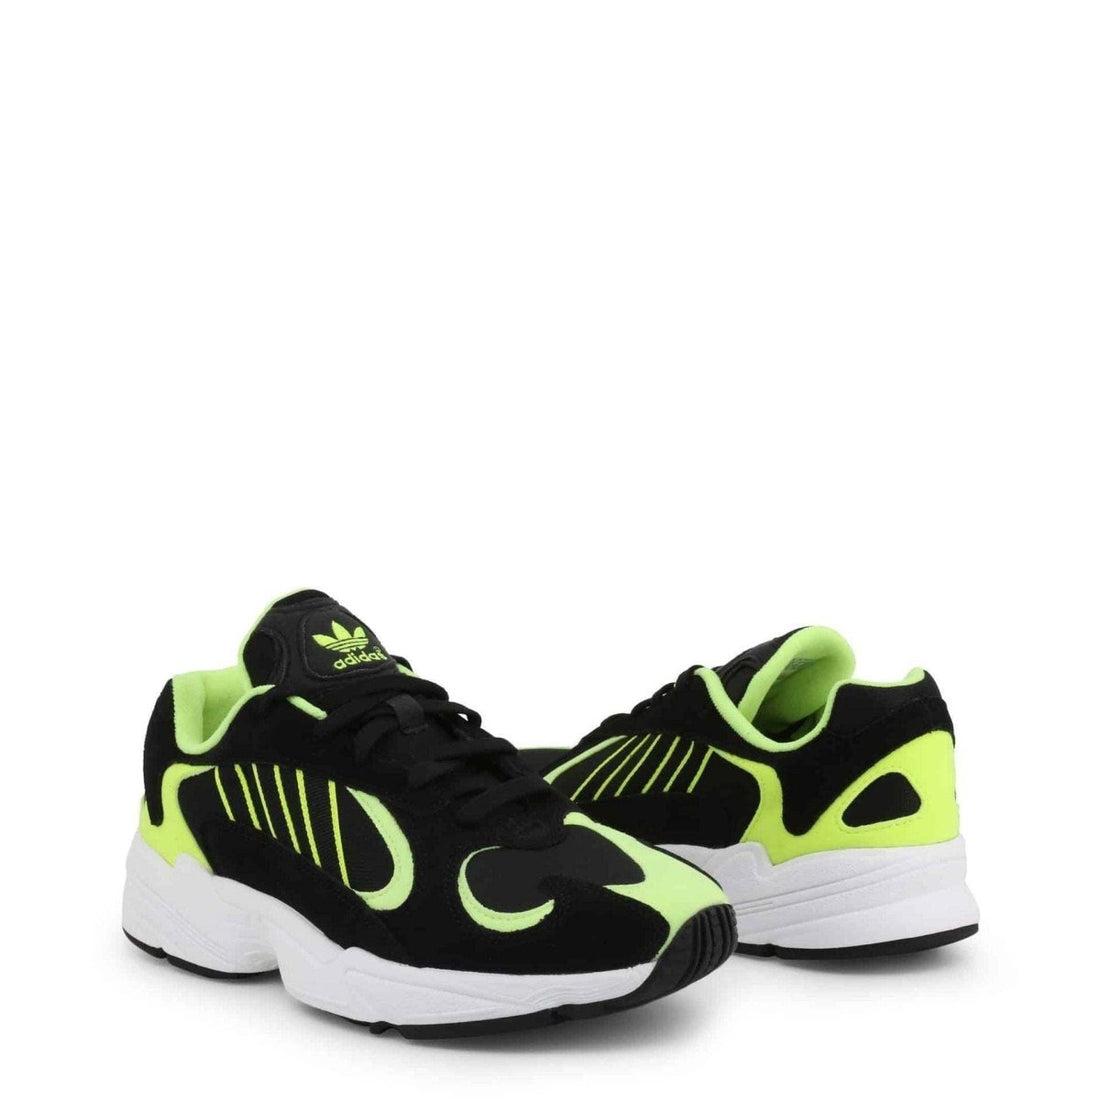 Adidas Sneakers - TINT - Sneakers - Adidas - EE5317_YUNG-1:293357